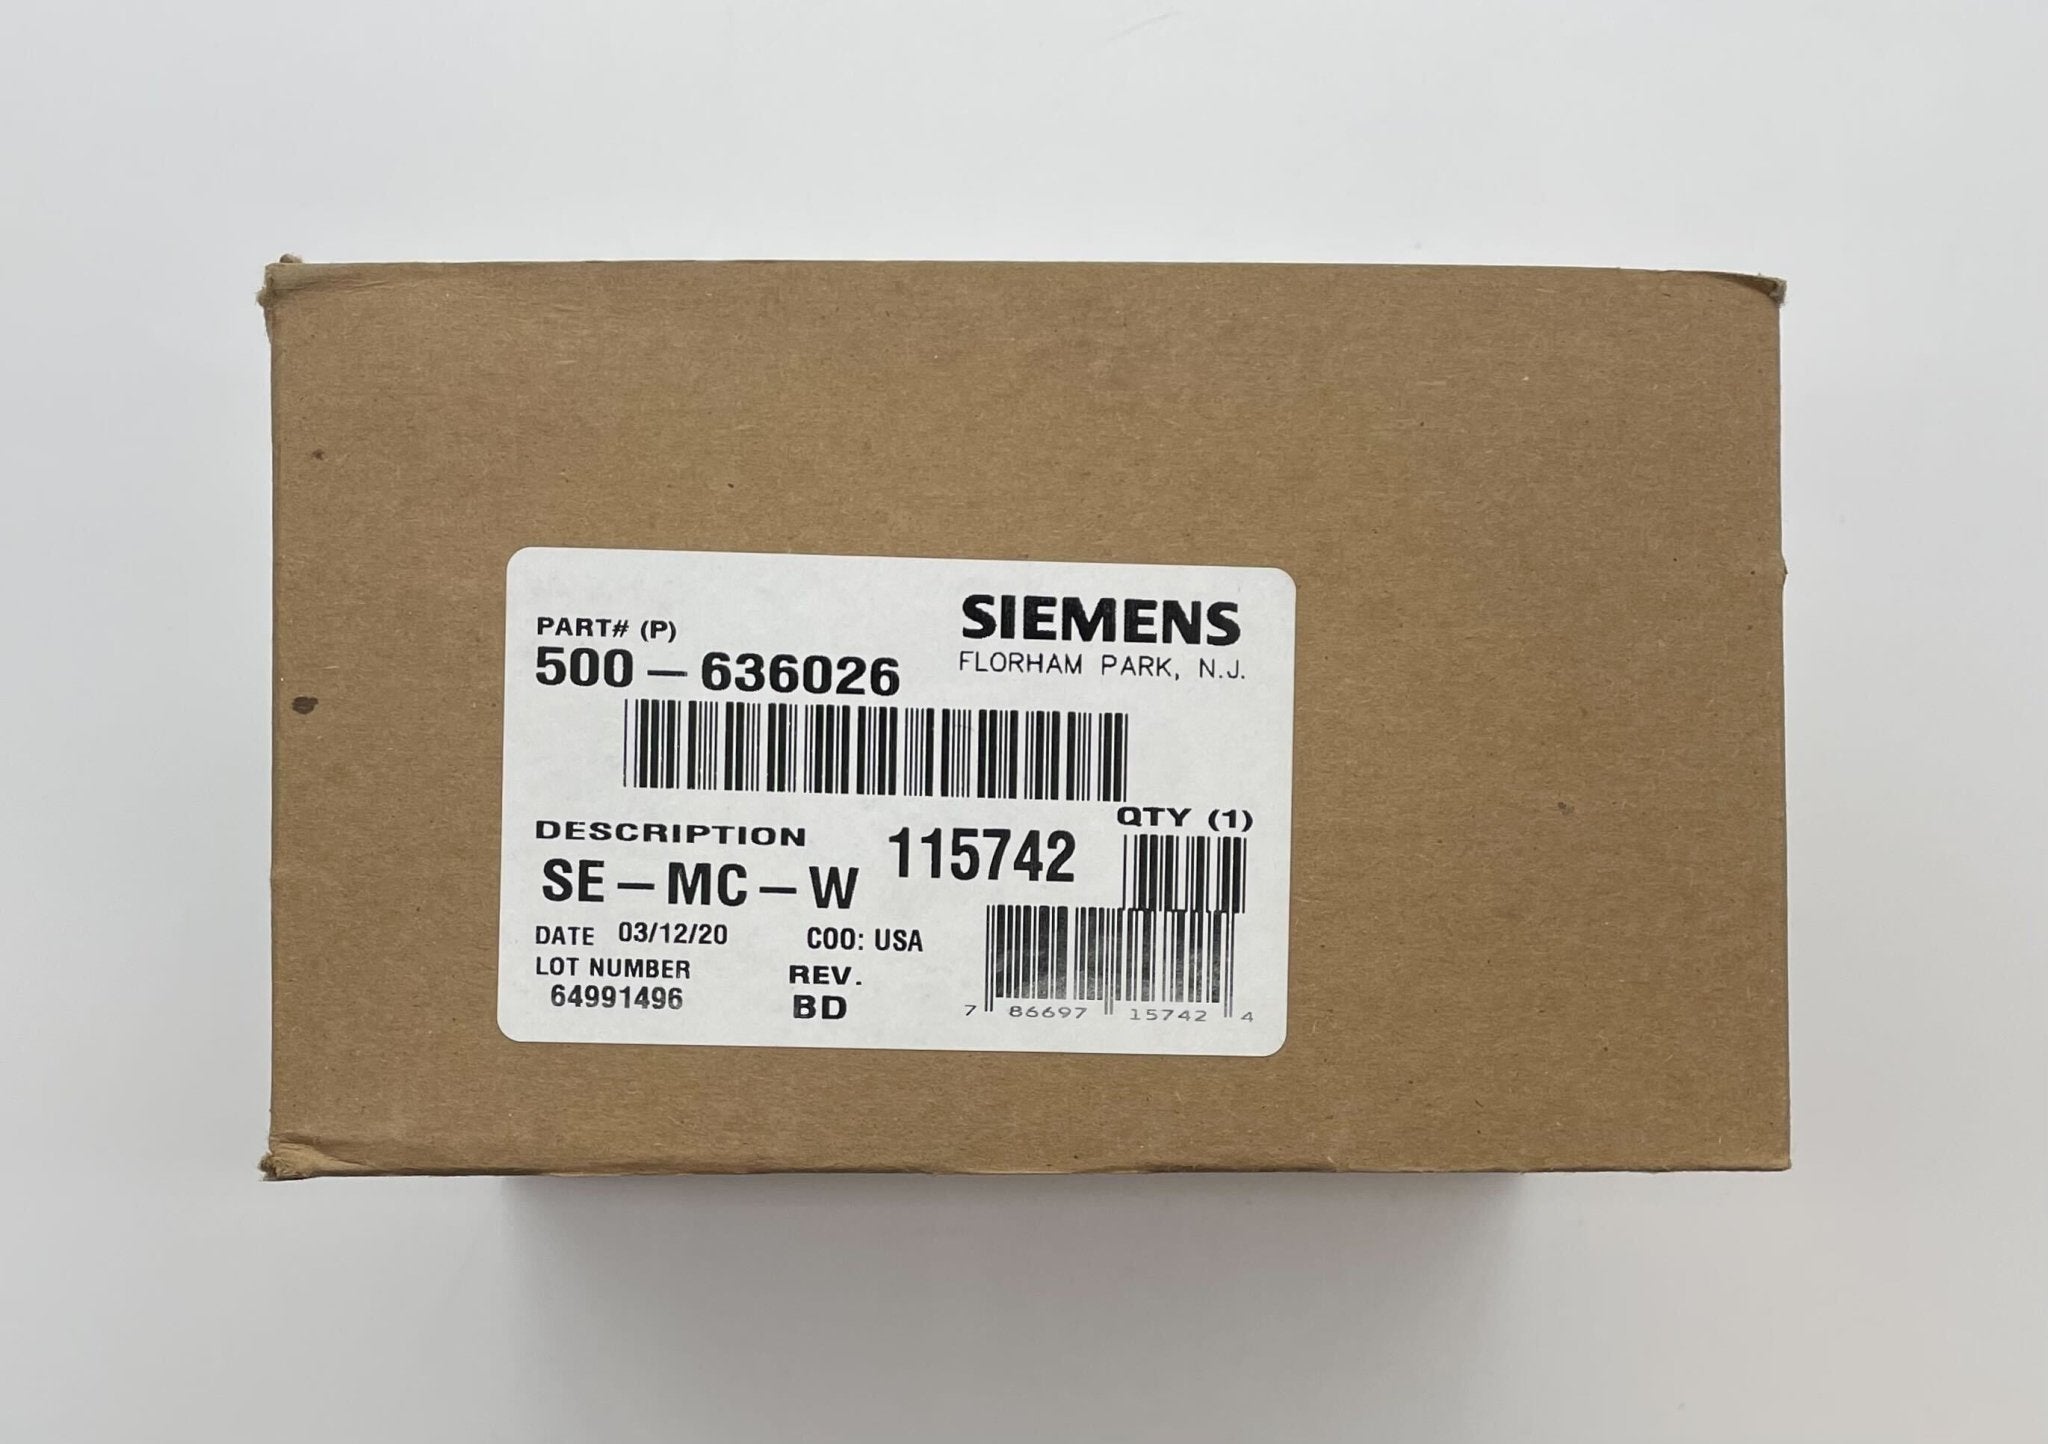 Siemens SE-MC-W Multi-Candela Speaker Strobe - The Fire Alarm Supplier